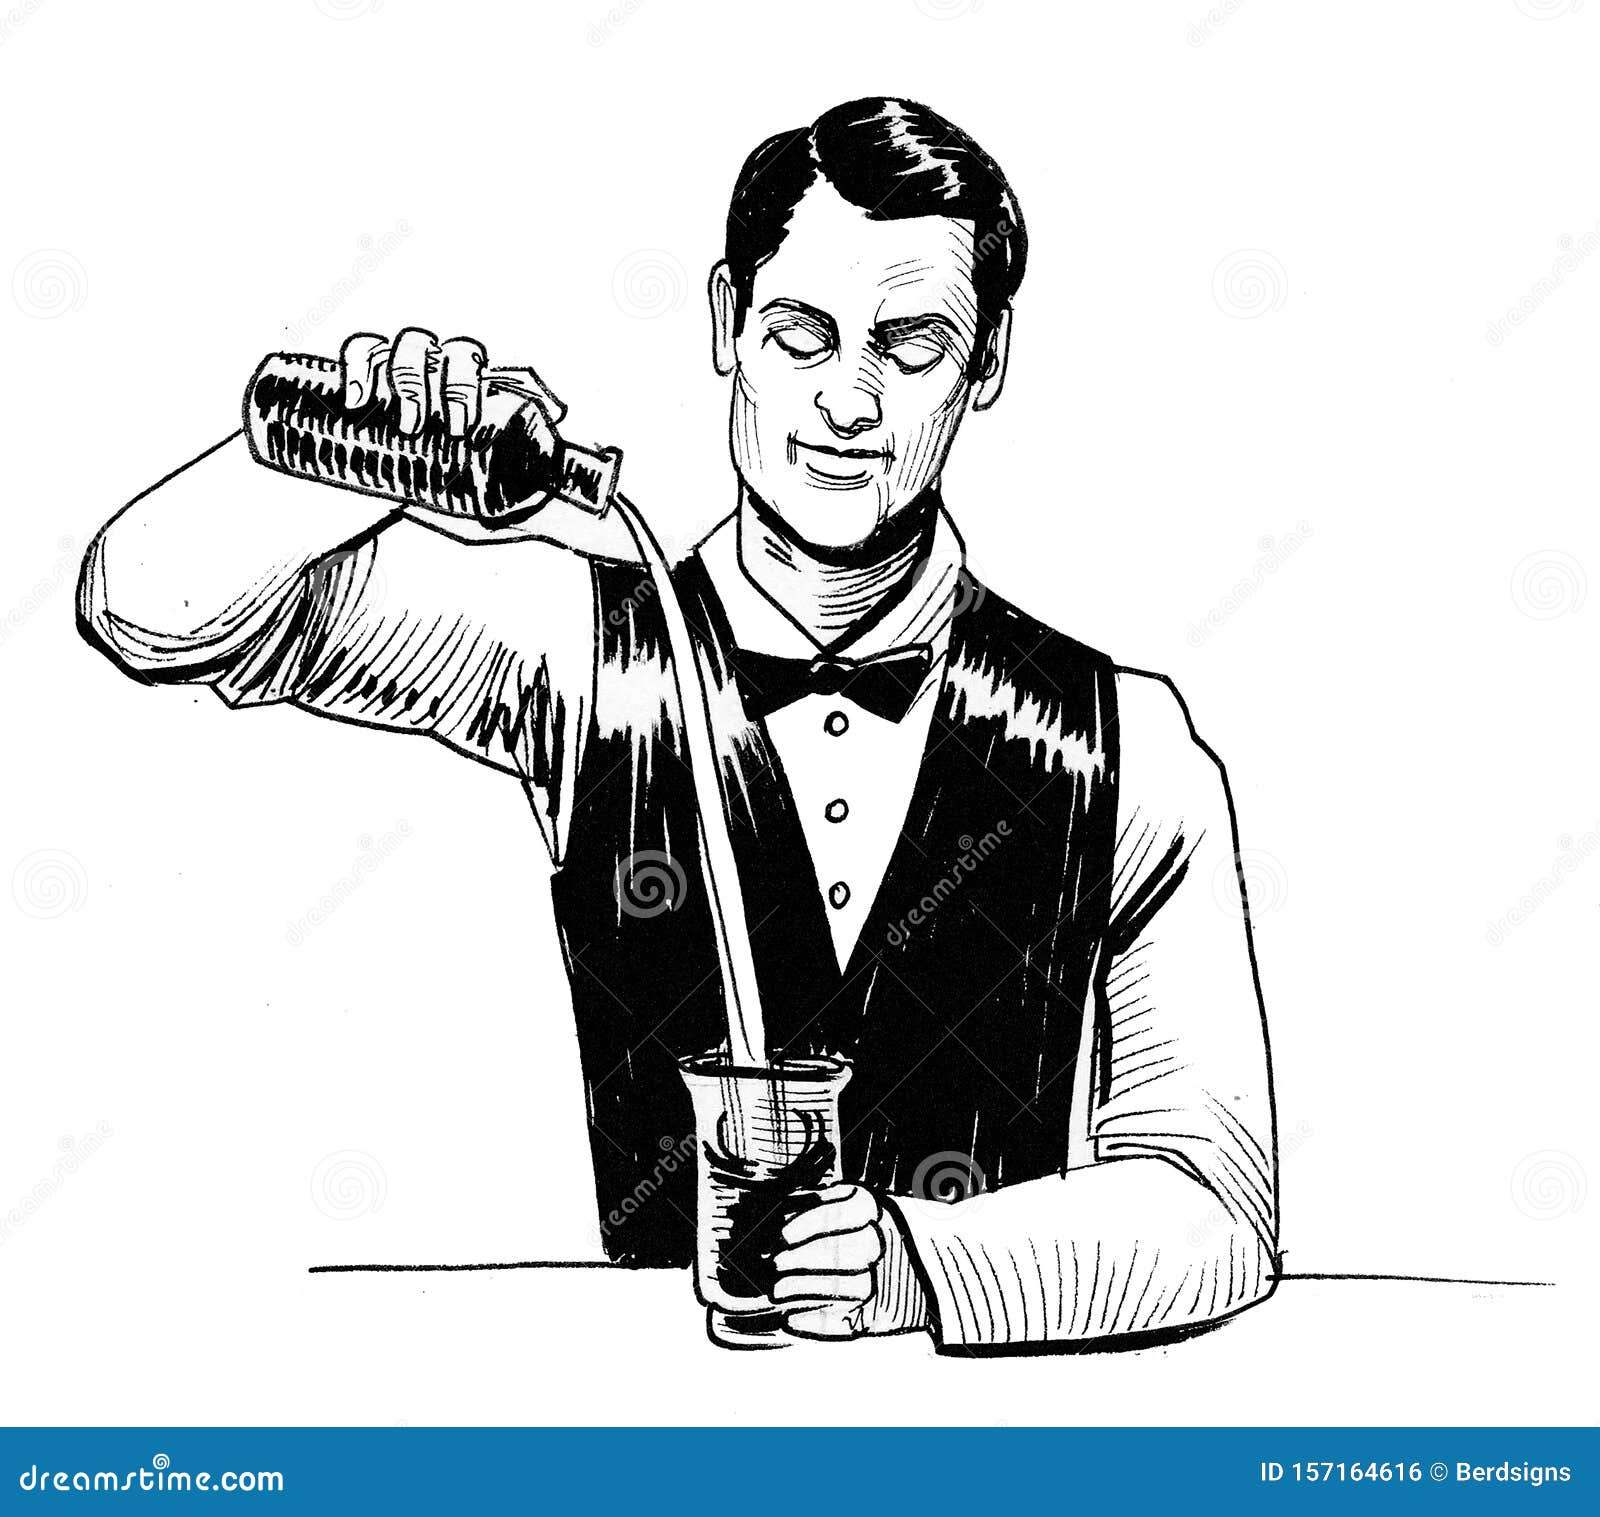 Working bartender stock illustration. Illustration of barman - 157164616